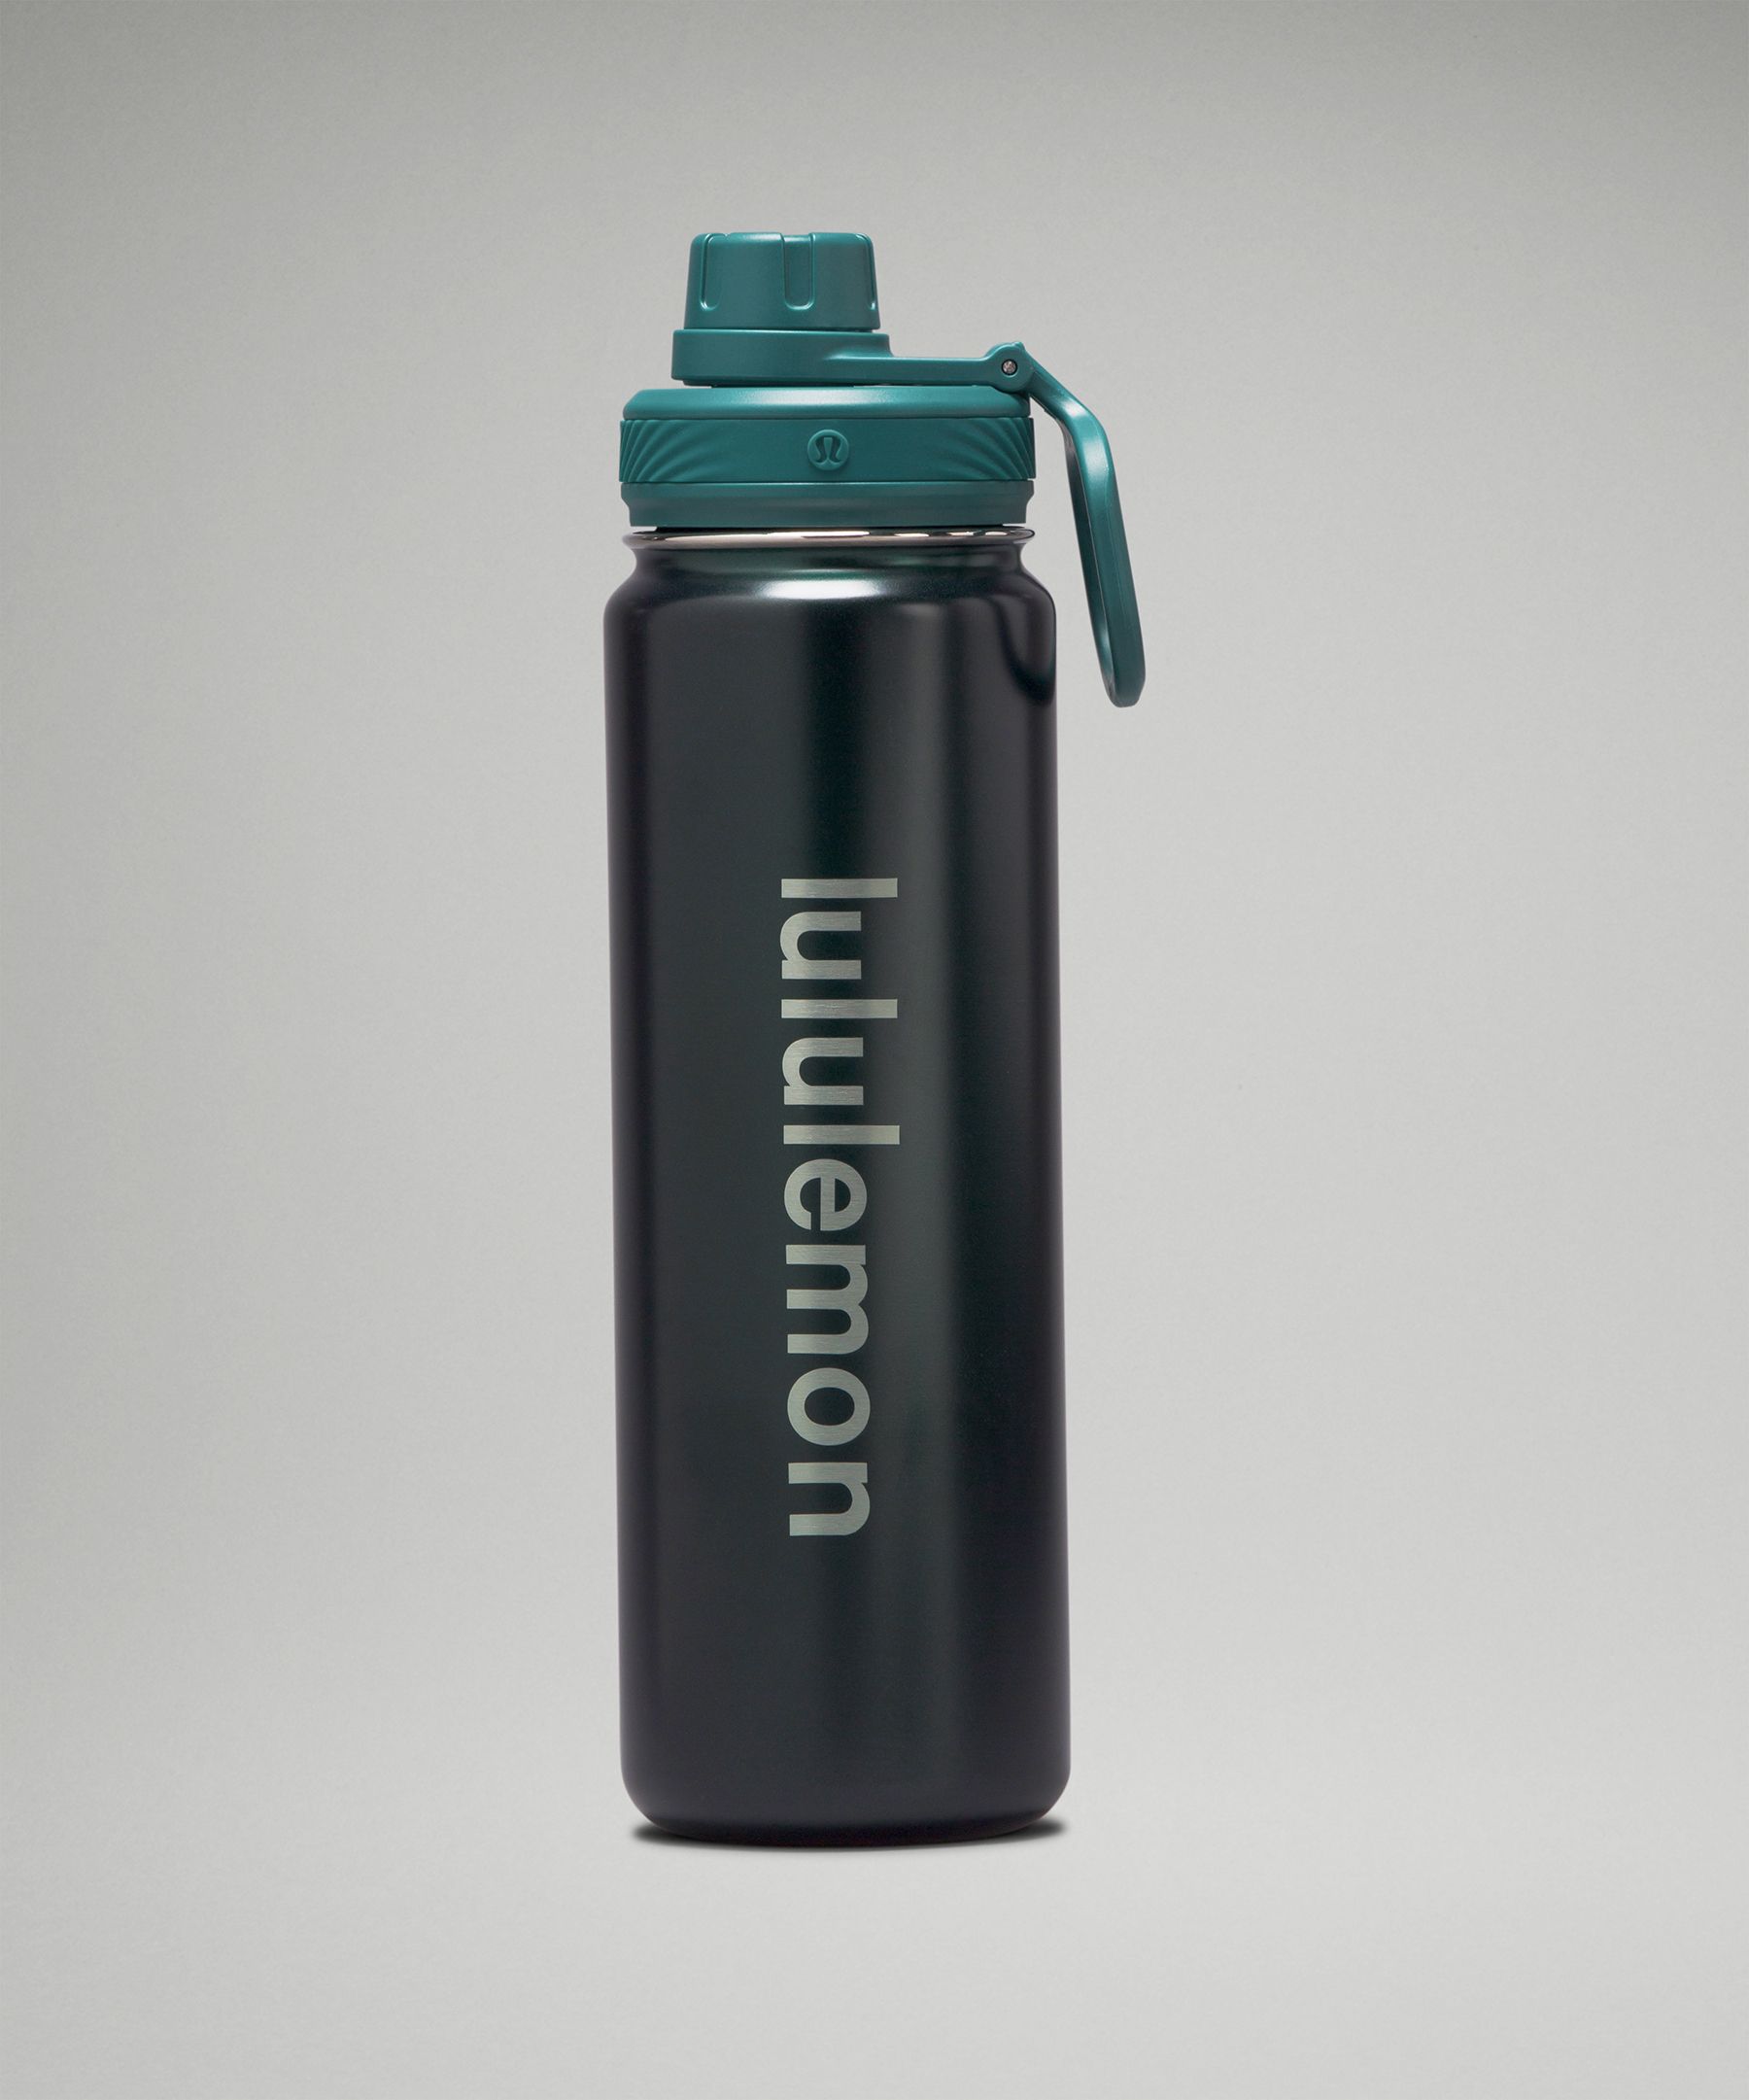 Lululemon athletica Back to Life Sport Bottle 24oz, Unisex Water Bottles